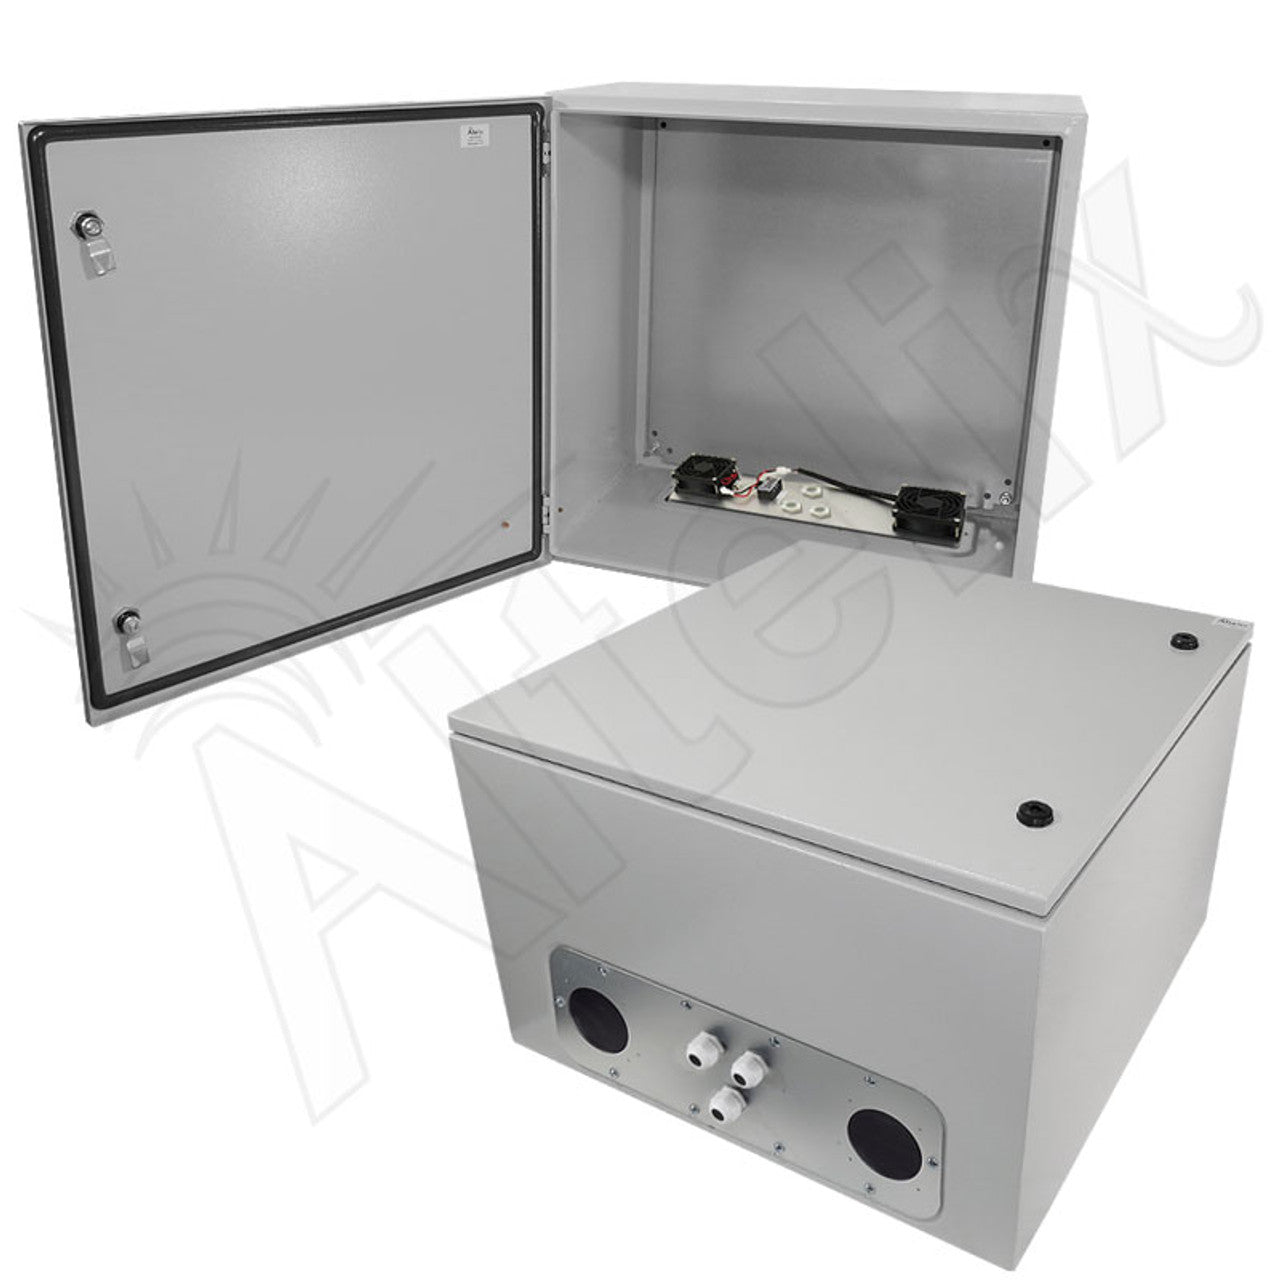 Altelix Steel Weatherproof NEMA Enclosure with Dual 48 VDC Cooling Fans